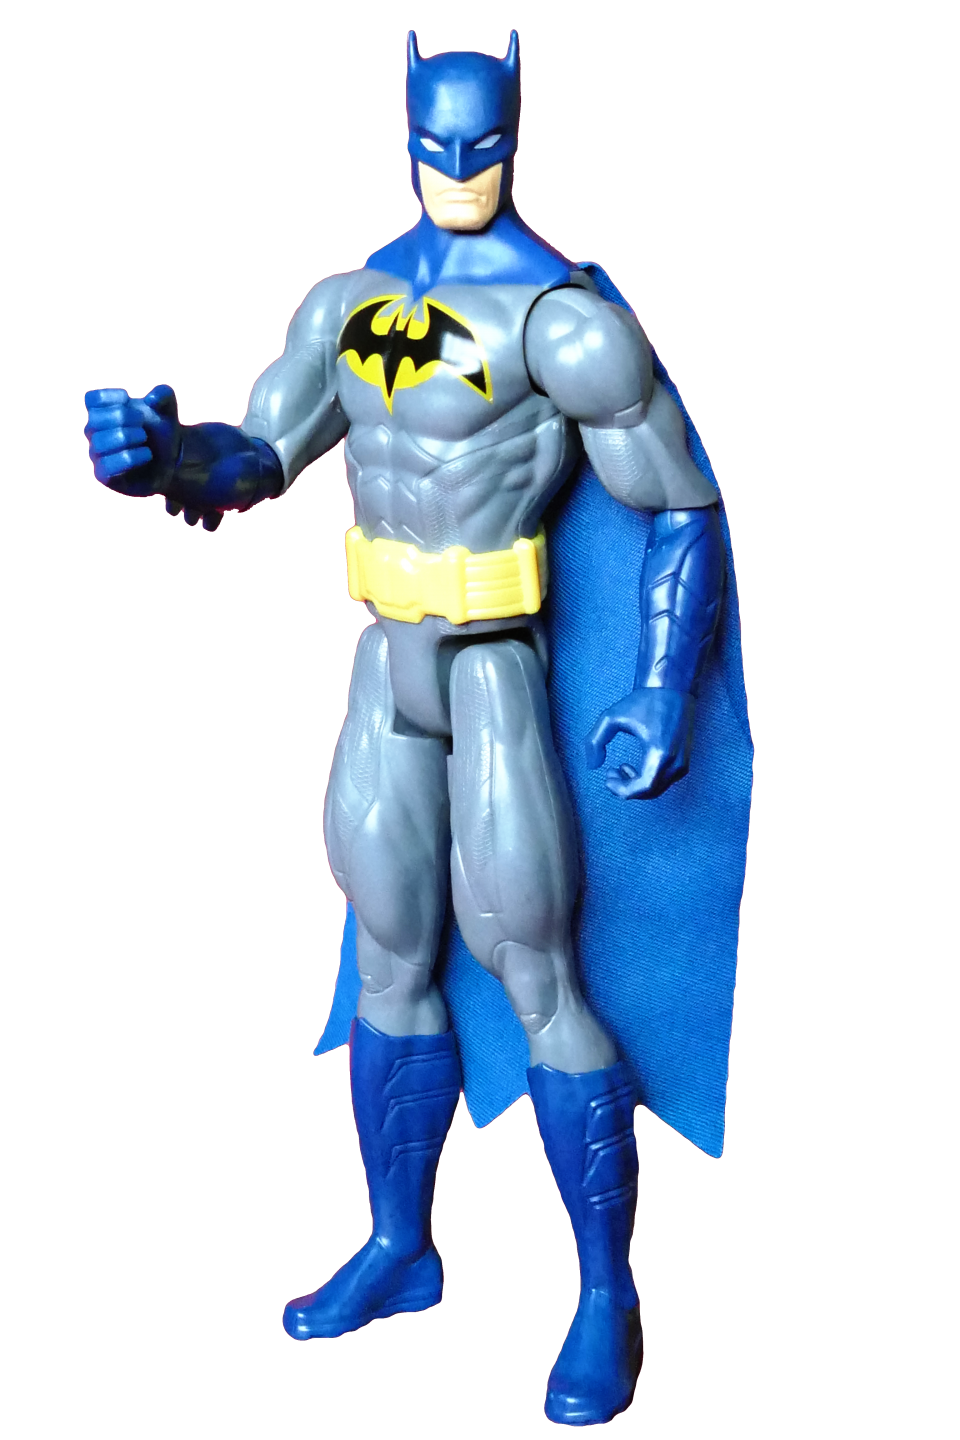 Batman Toy PNG Image - PurePNG | Free transparent CC0 PNG Image Library